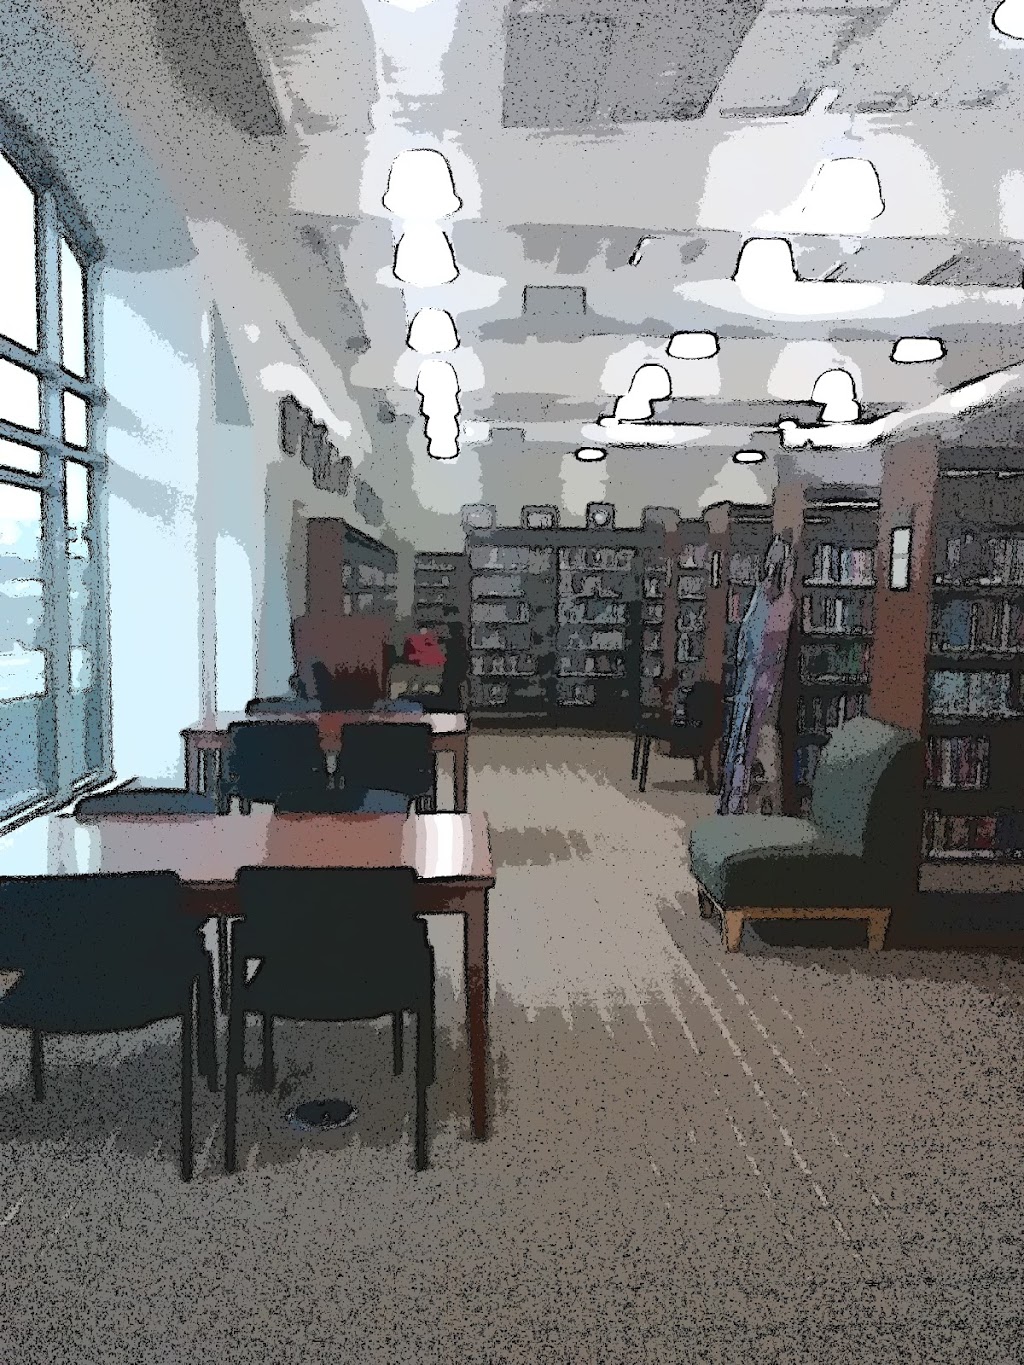 Cambridge City Public Library | 600 W Main St, Cambridge City, IN 47327, USA | Phone: (765) 478-3335